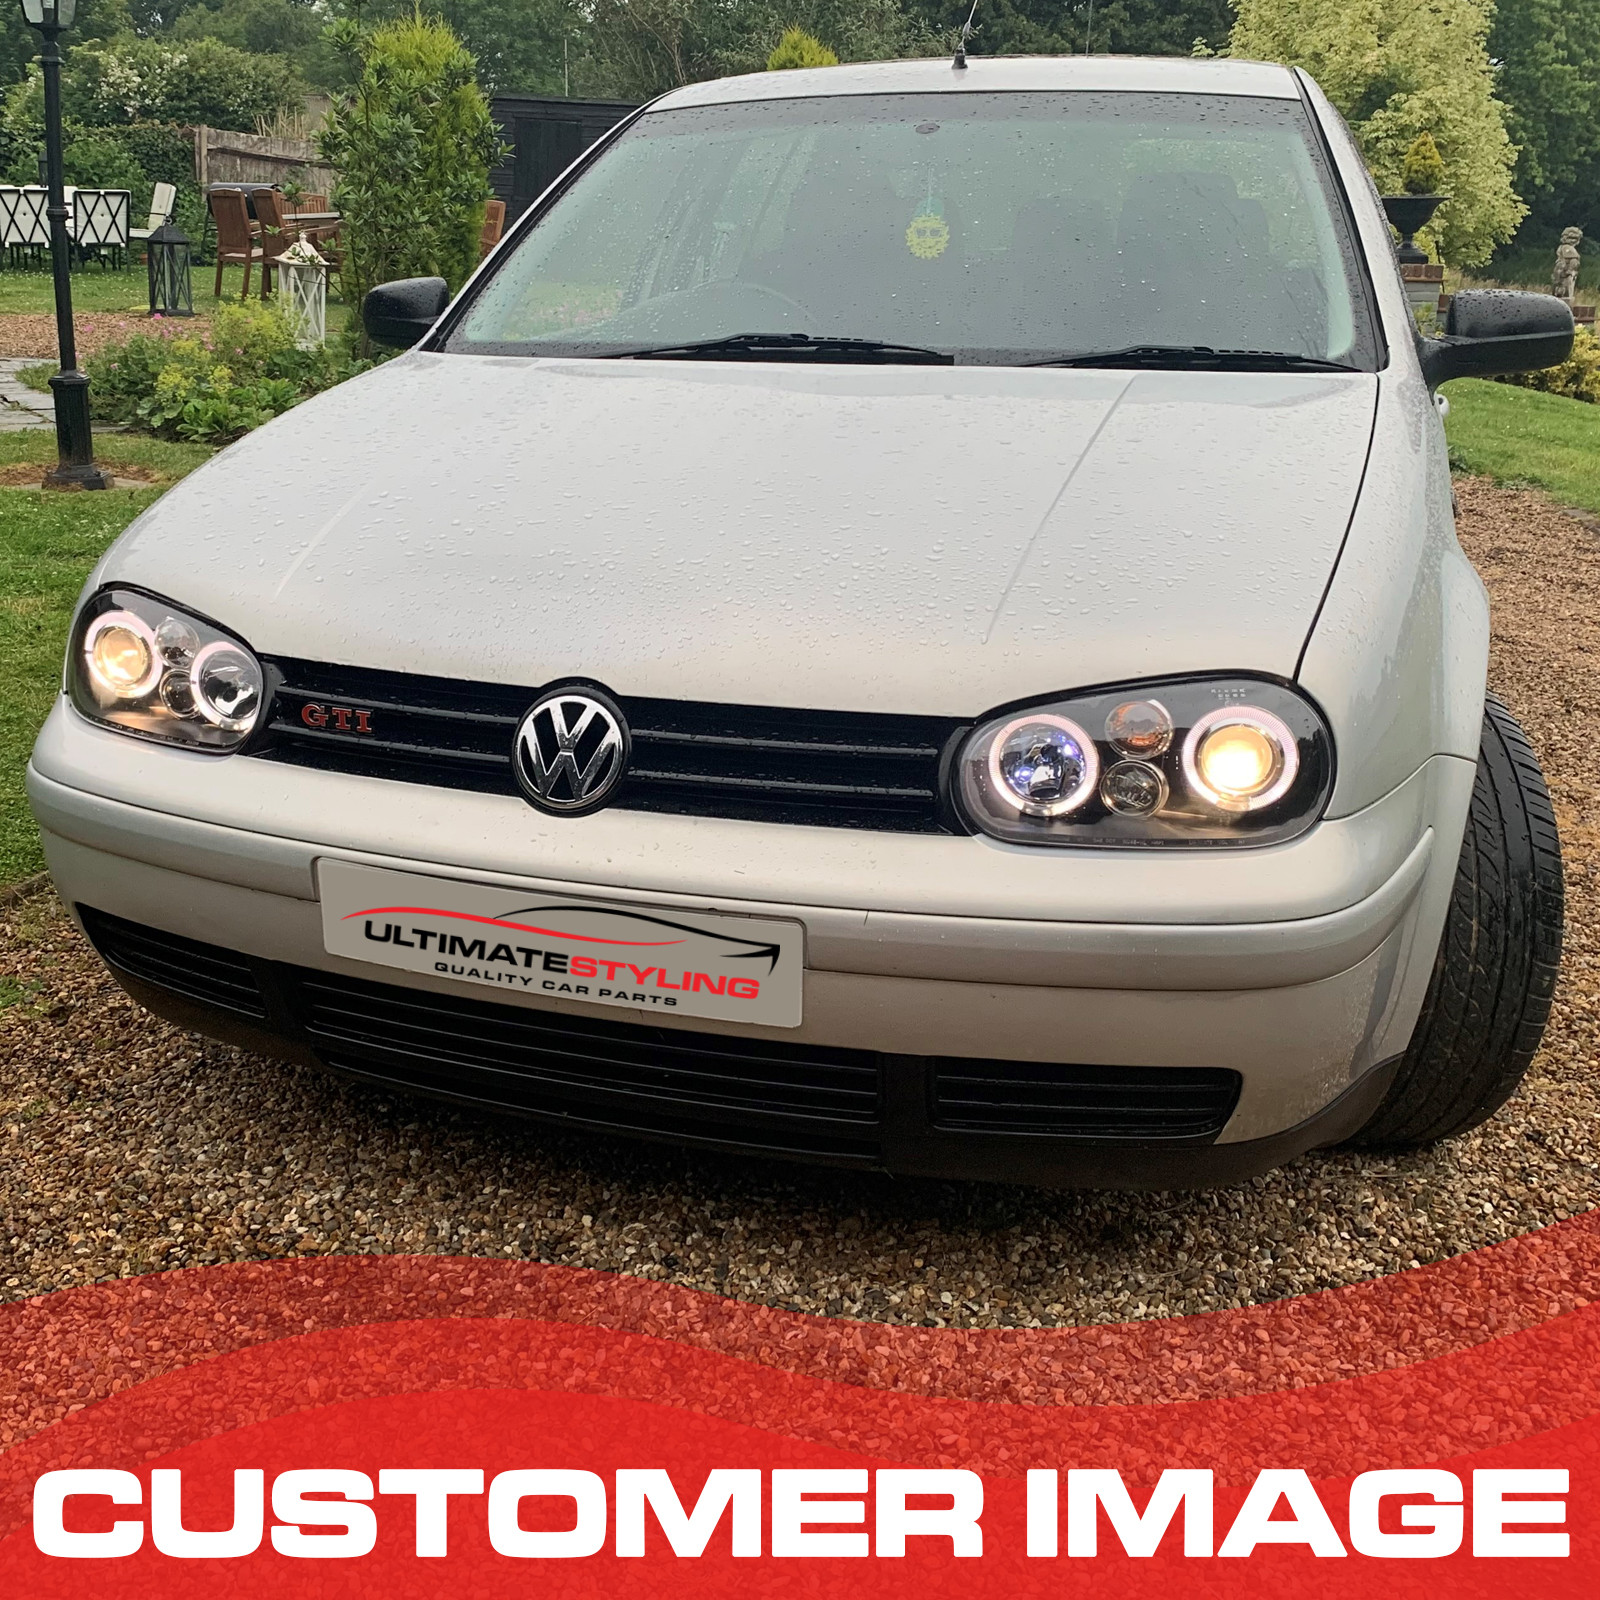 VW Golf Mk4 1997-2004 Upgrade Headlights Black Inner LED Twin Angel Eyes  Halo with Fog Lights Projector Xenon Look